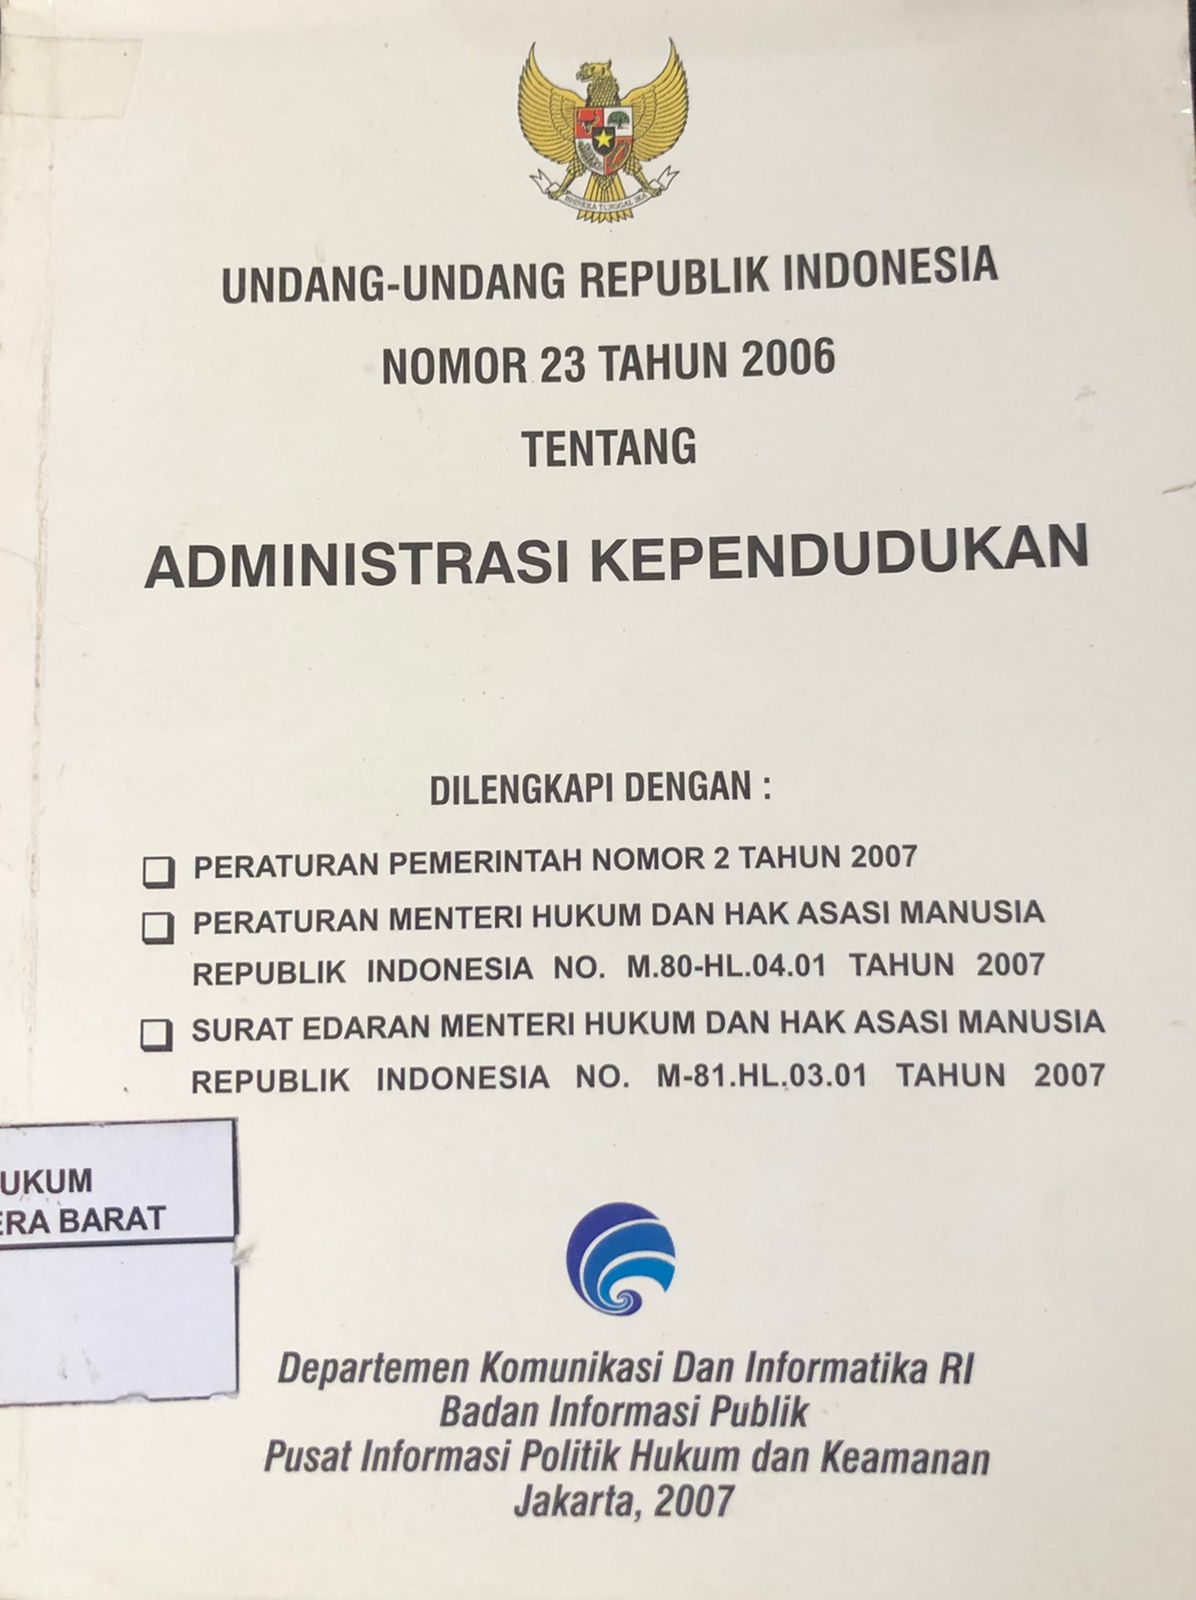 Undang-Undang Republik Indonesia Nomor 23 Tahun 2006 Tentang Administrasi Kependudukan